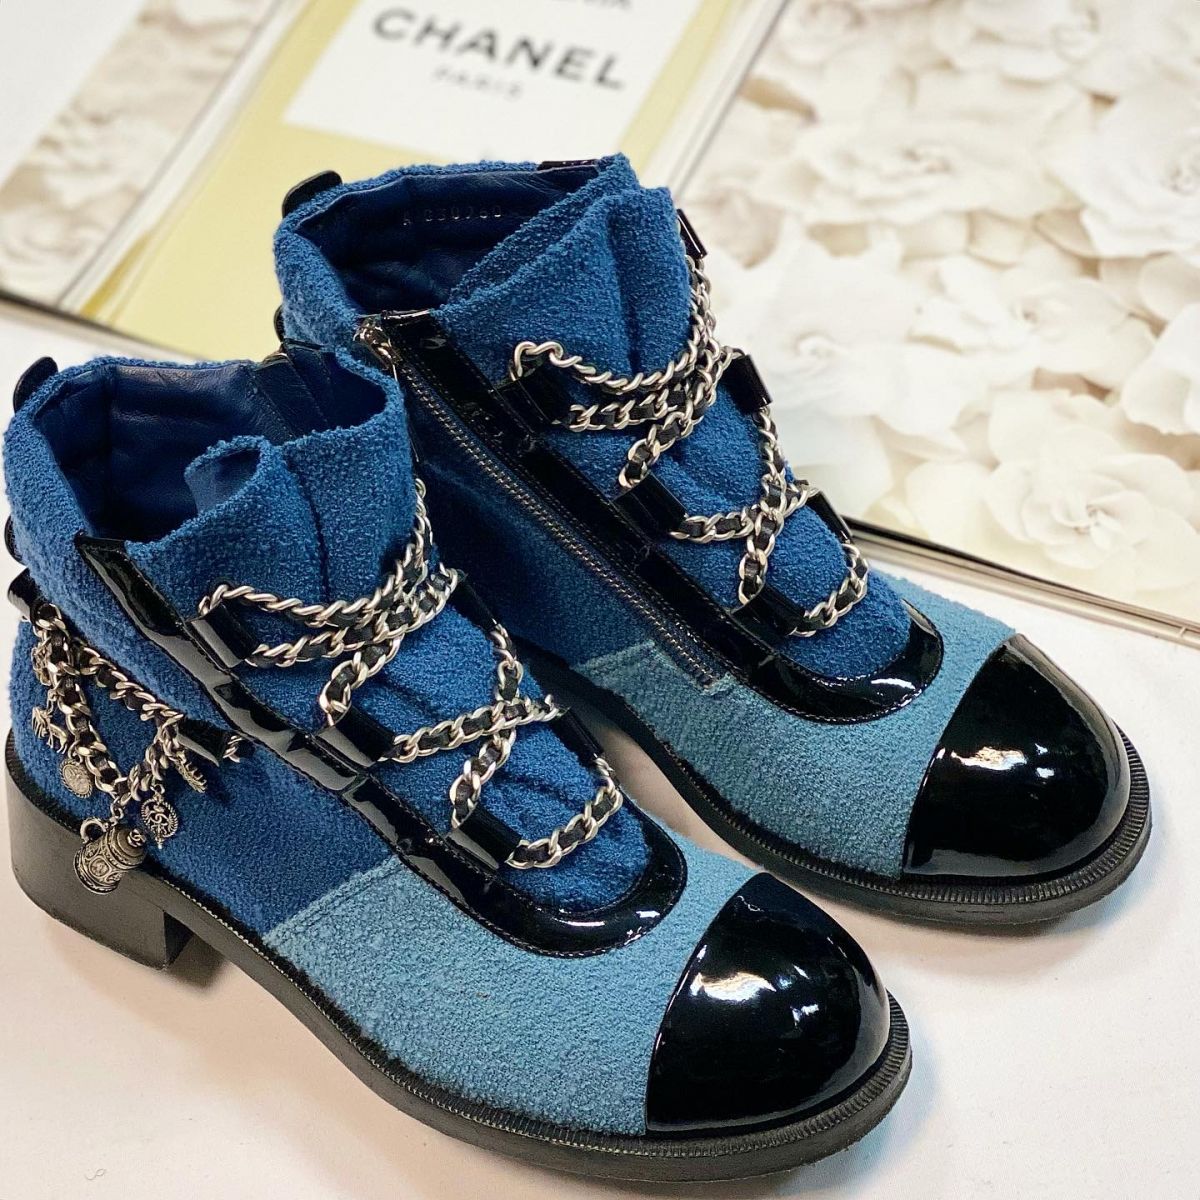 Ботинки Chanel размер 38.5 цена 38 463 руб 